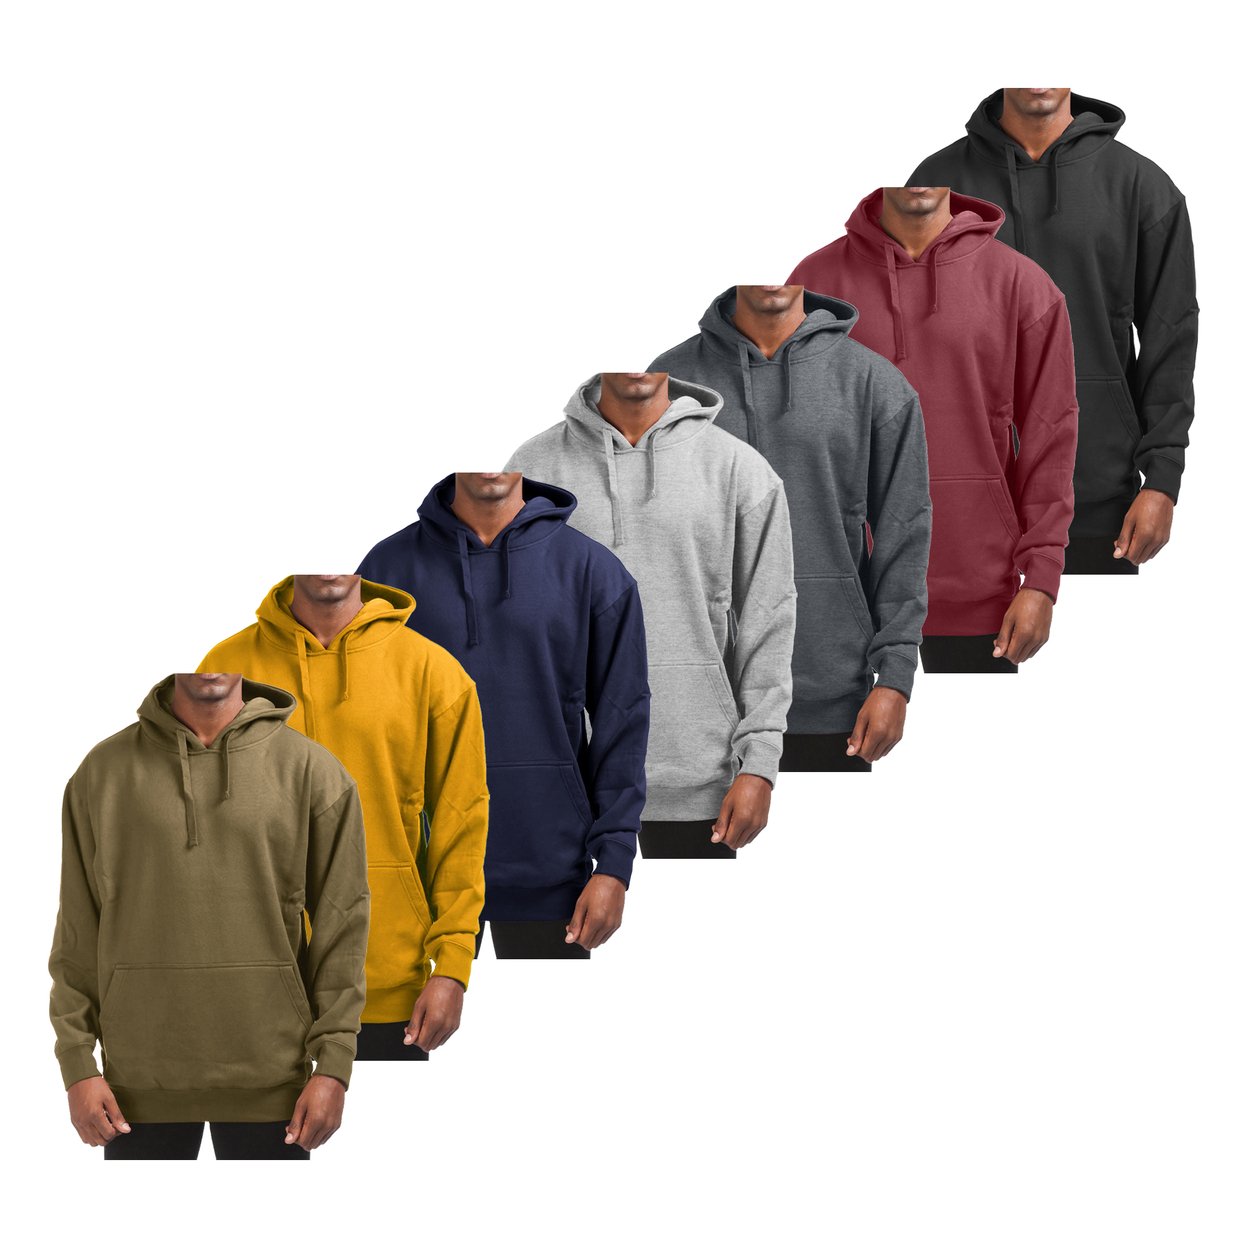 2-Pack: Men's Super-Soft Winter Warm Cotton-Blend Fleece Pullover Hoodie With Kangaroo Pocket - Black & Navy, Small